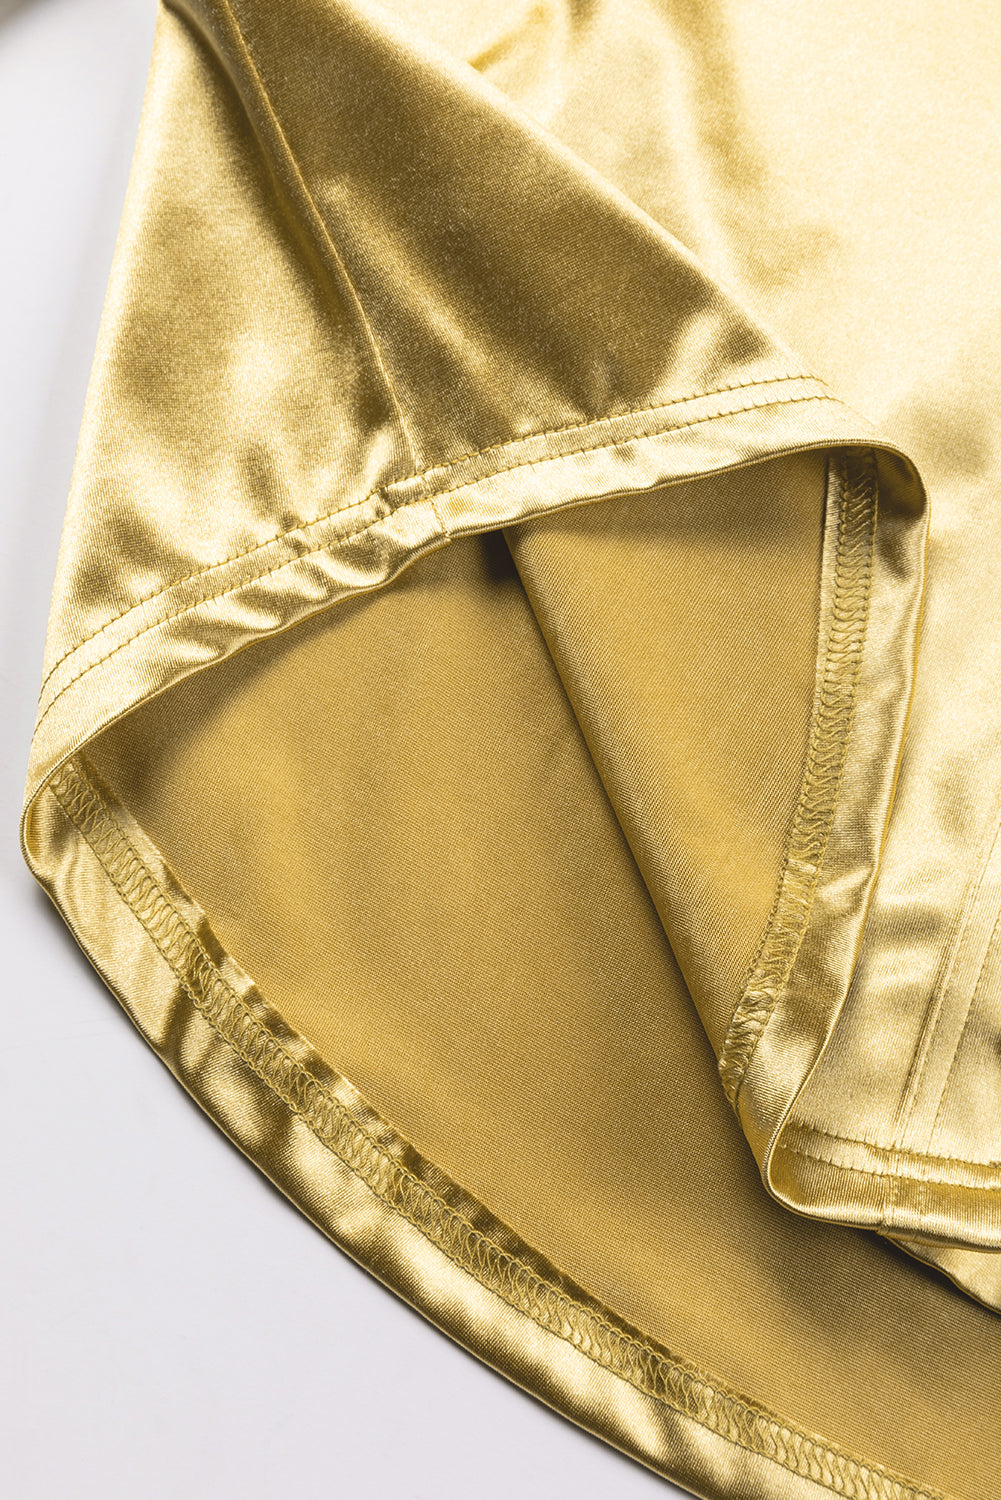 Gold Metallic Luster Chest Pocket Shirt